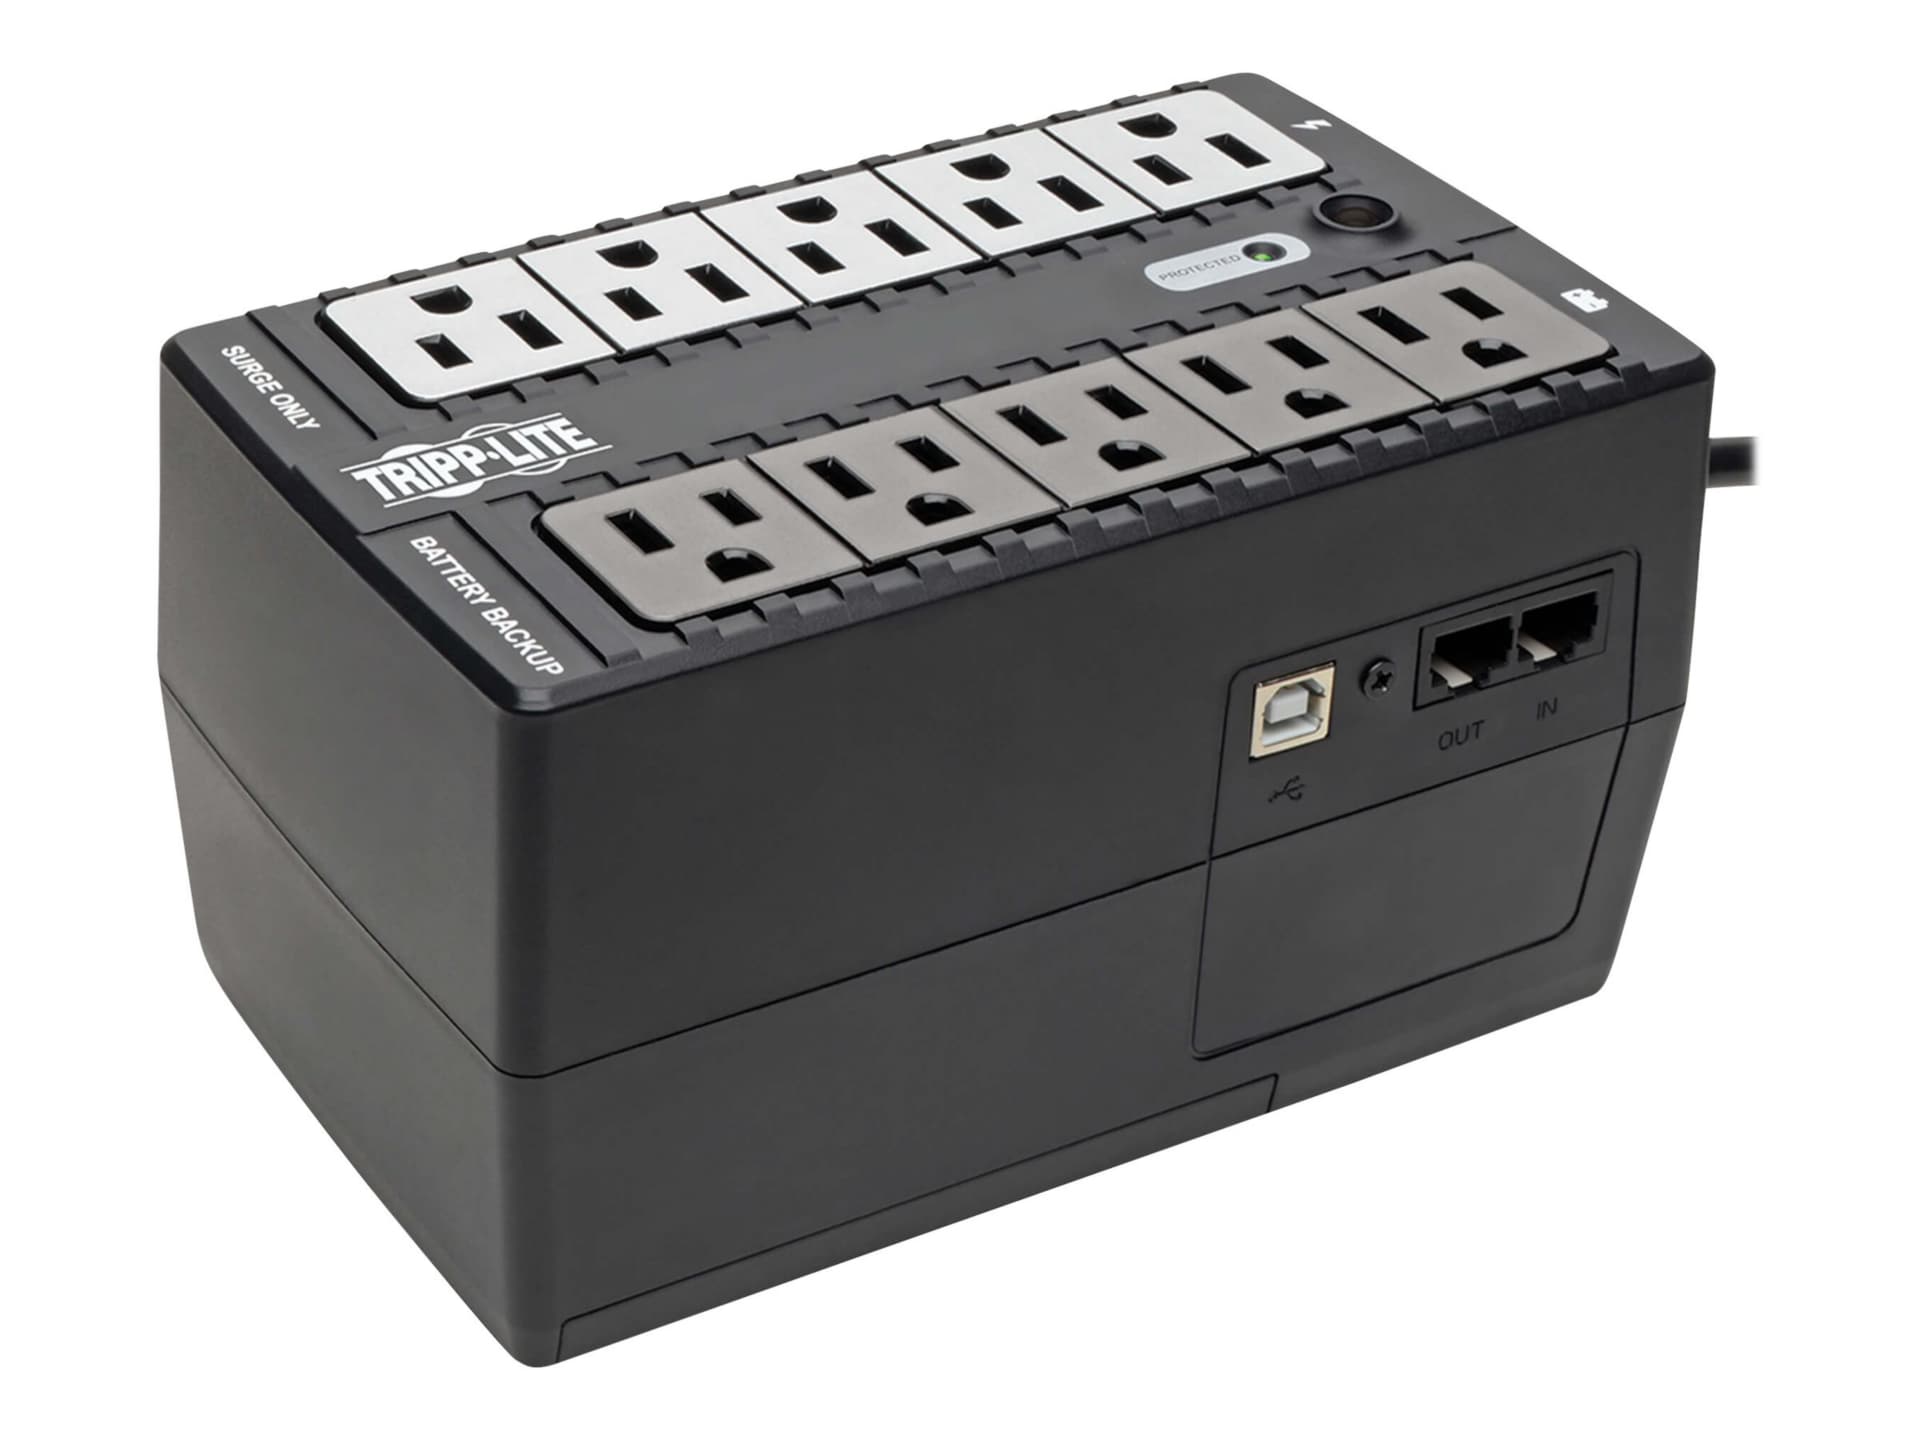 Tripp Lite UPS 600VA 325W Desktop Battery Backup Compact 120V